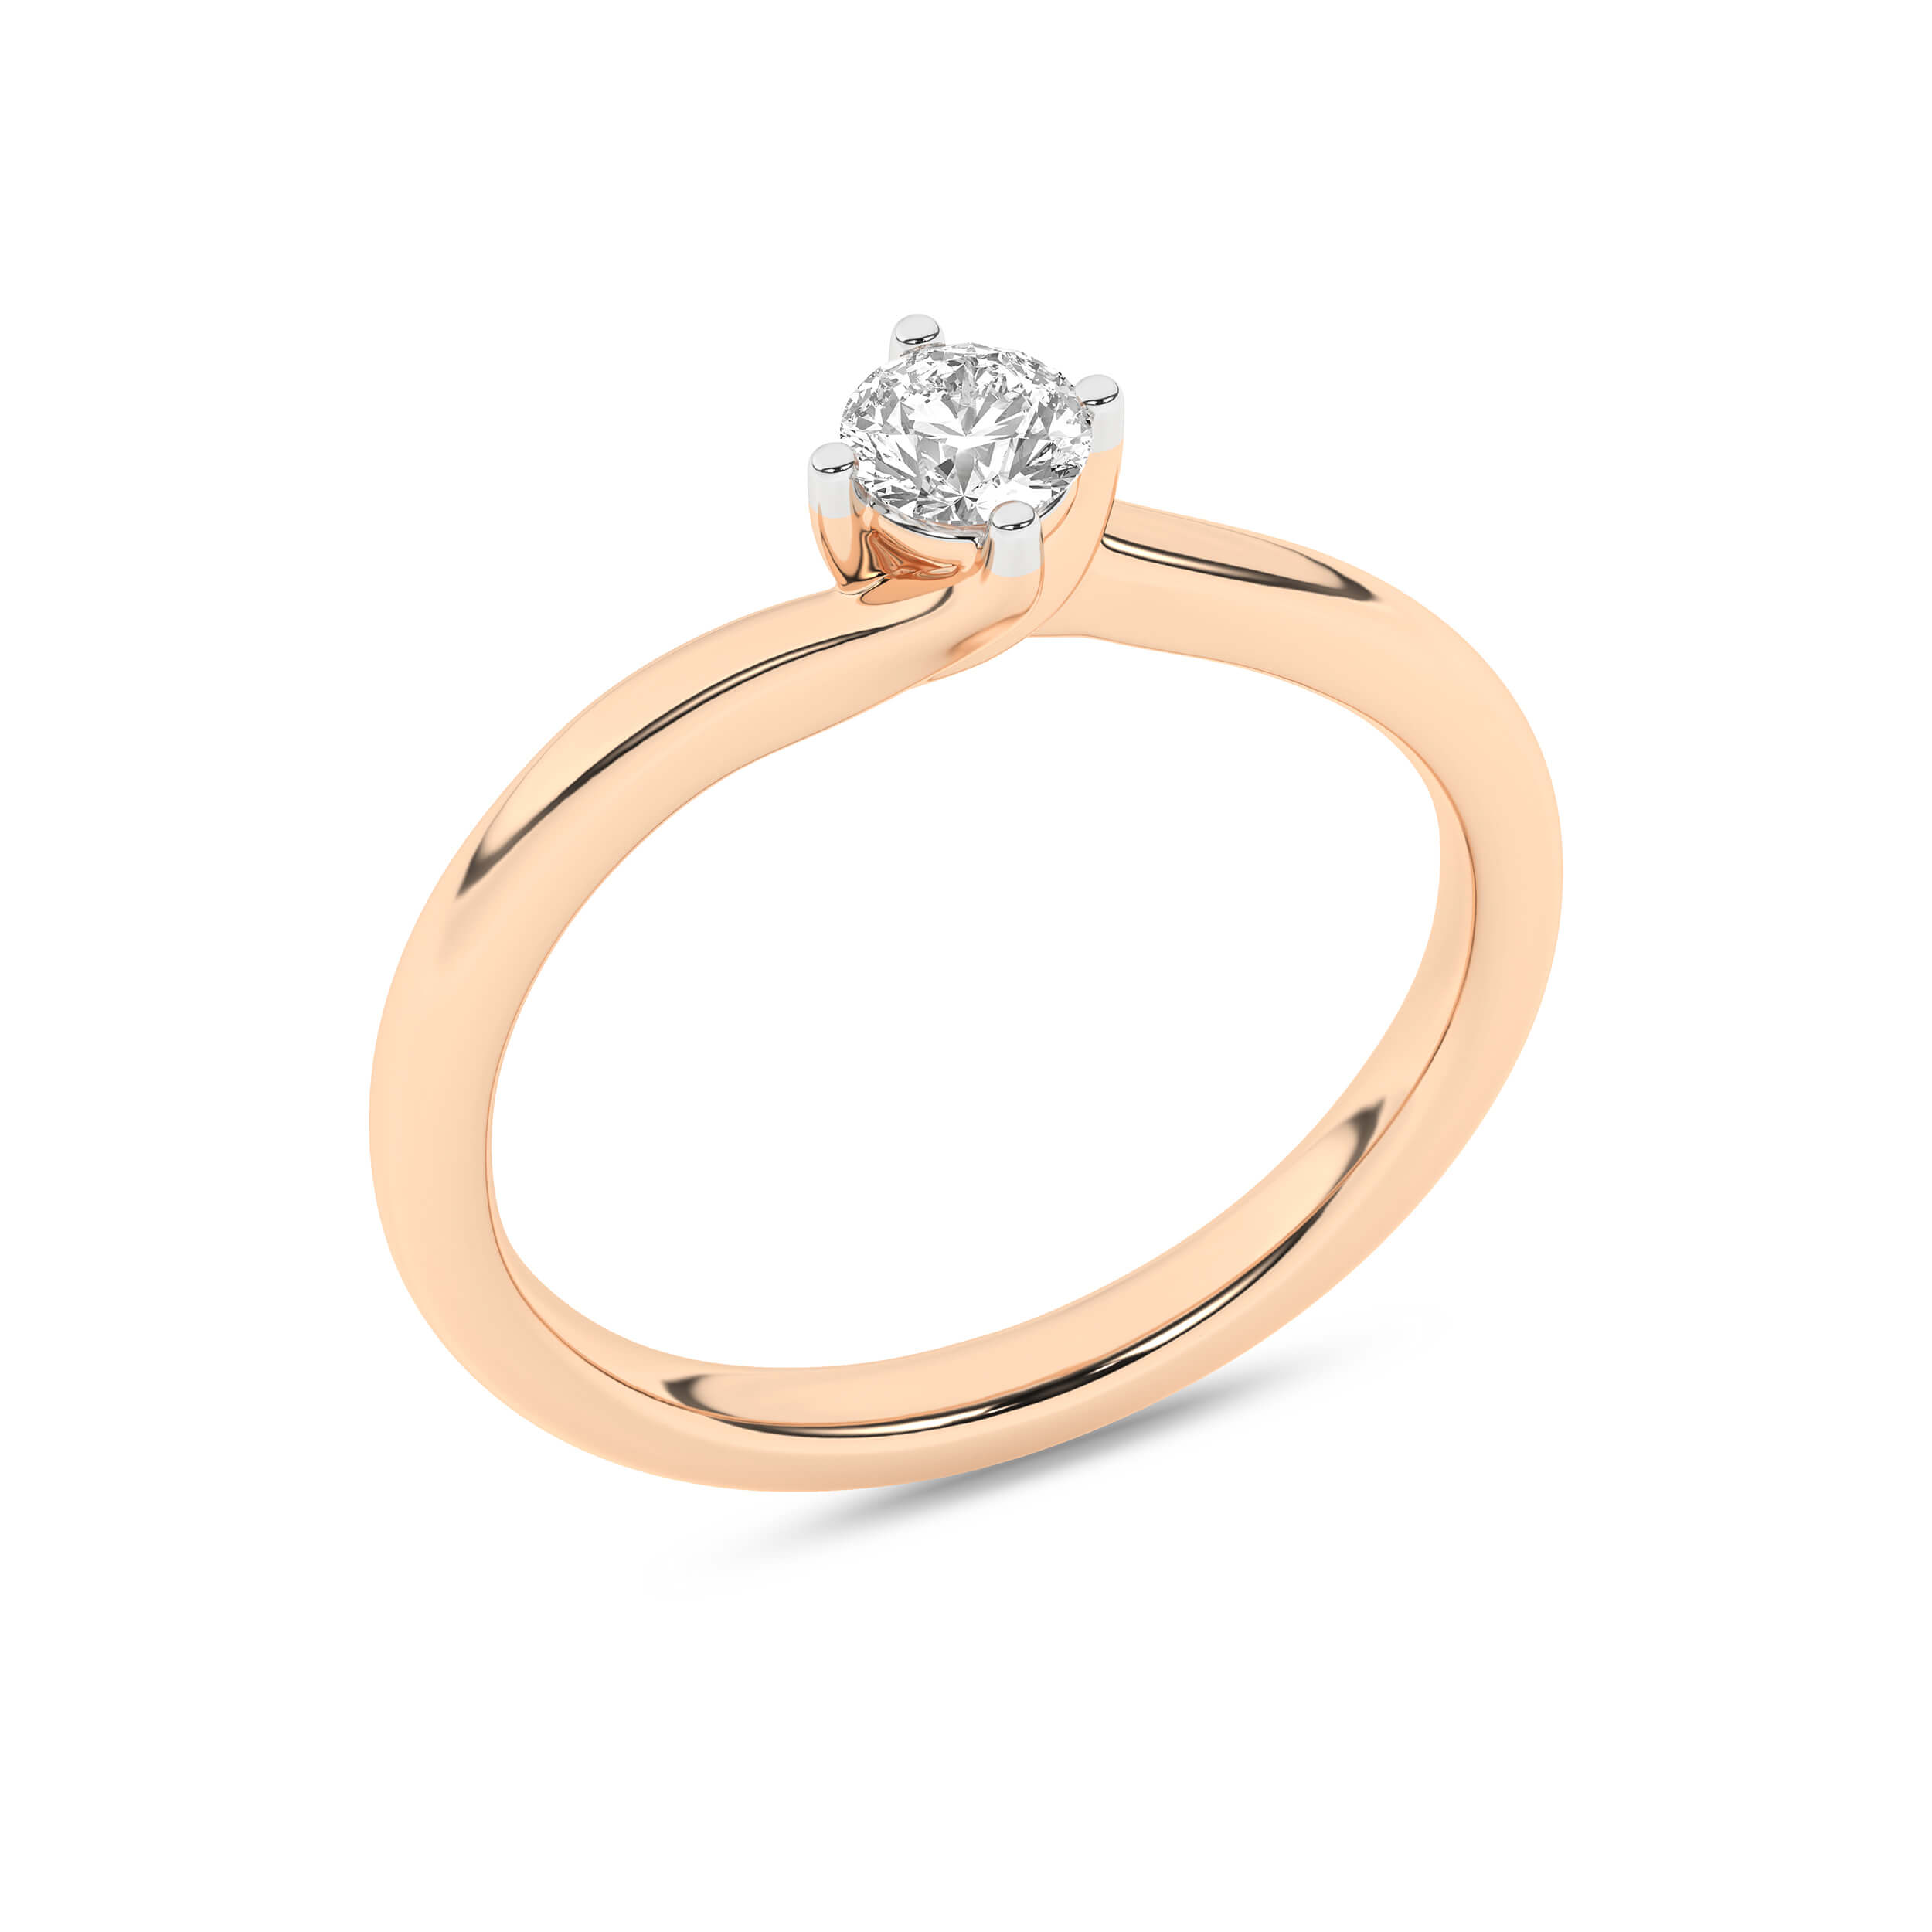 Inel de logodna din Aur Roz 14K cu Diamant 0.25Ct, articol RS0608, previzualizare foto 4